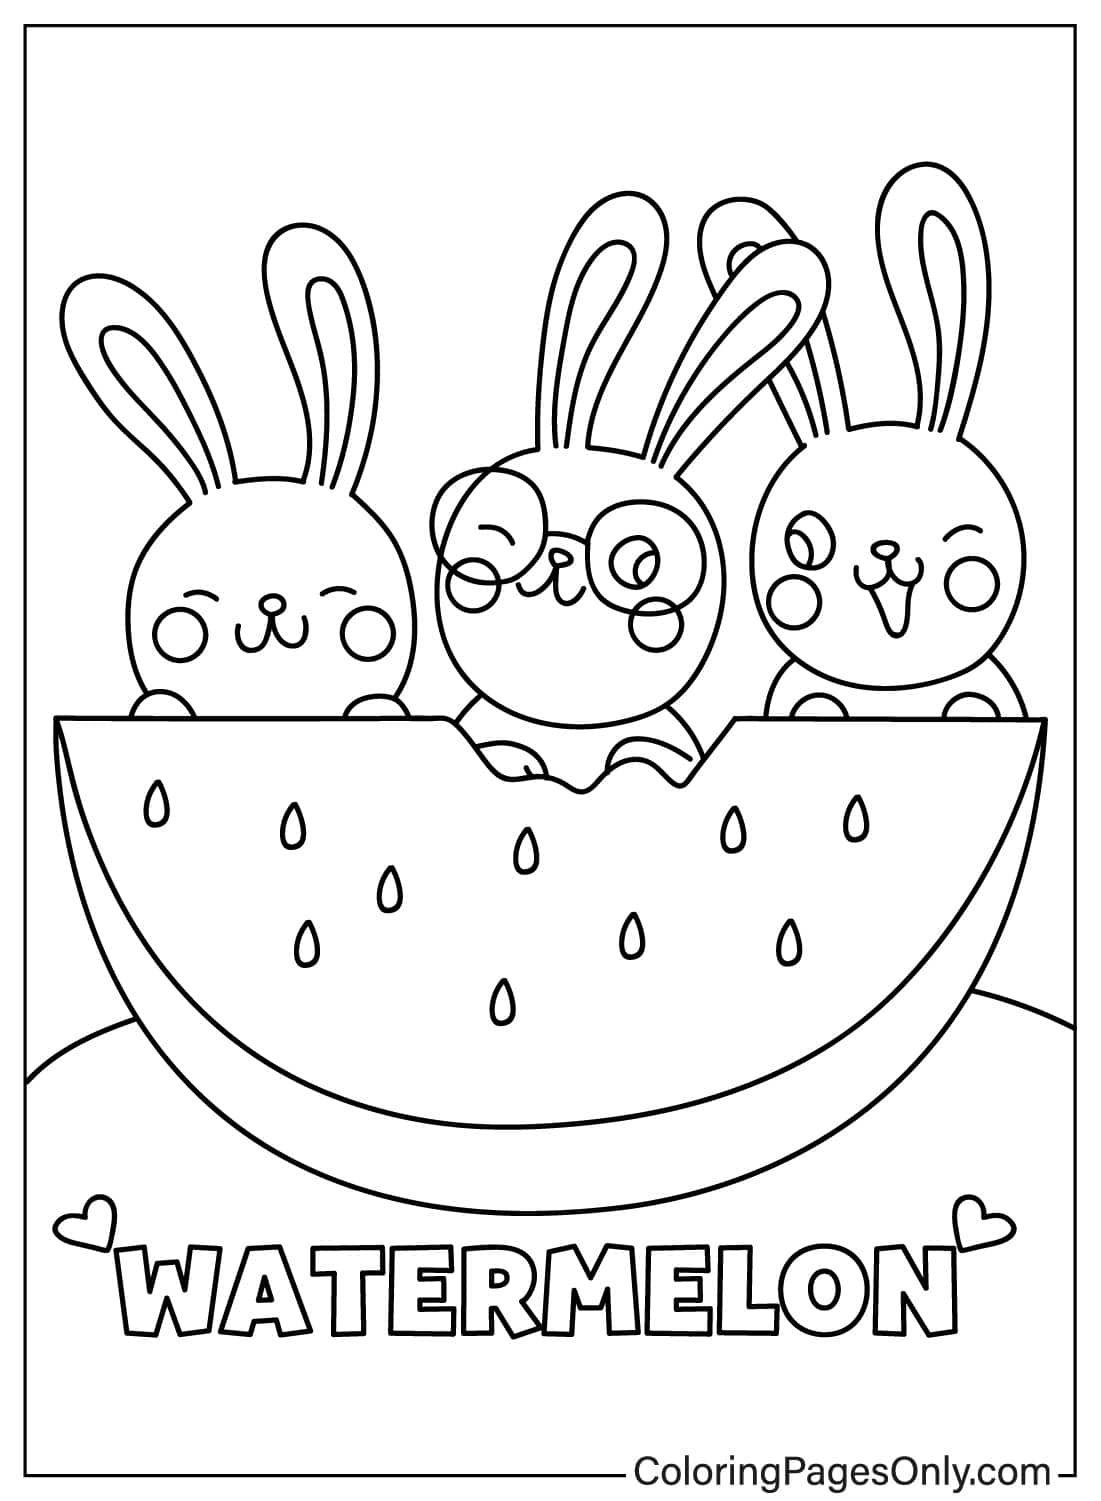 Drie konijnen eten samen watermeloen van Watermeloen